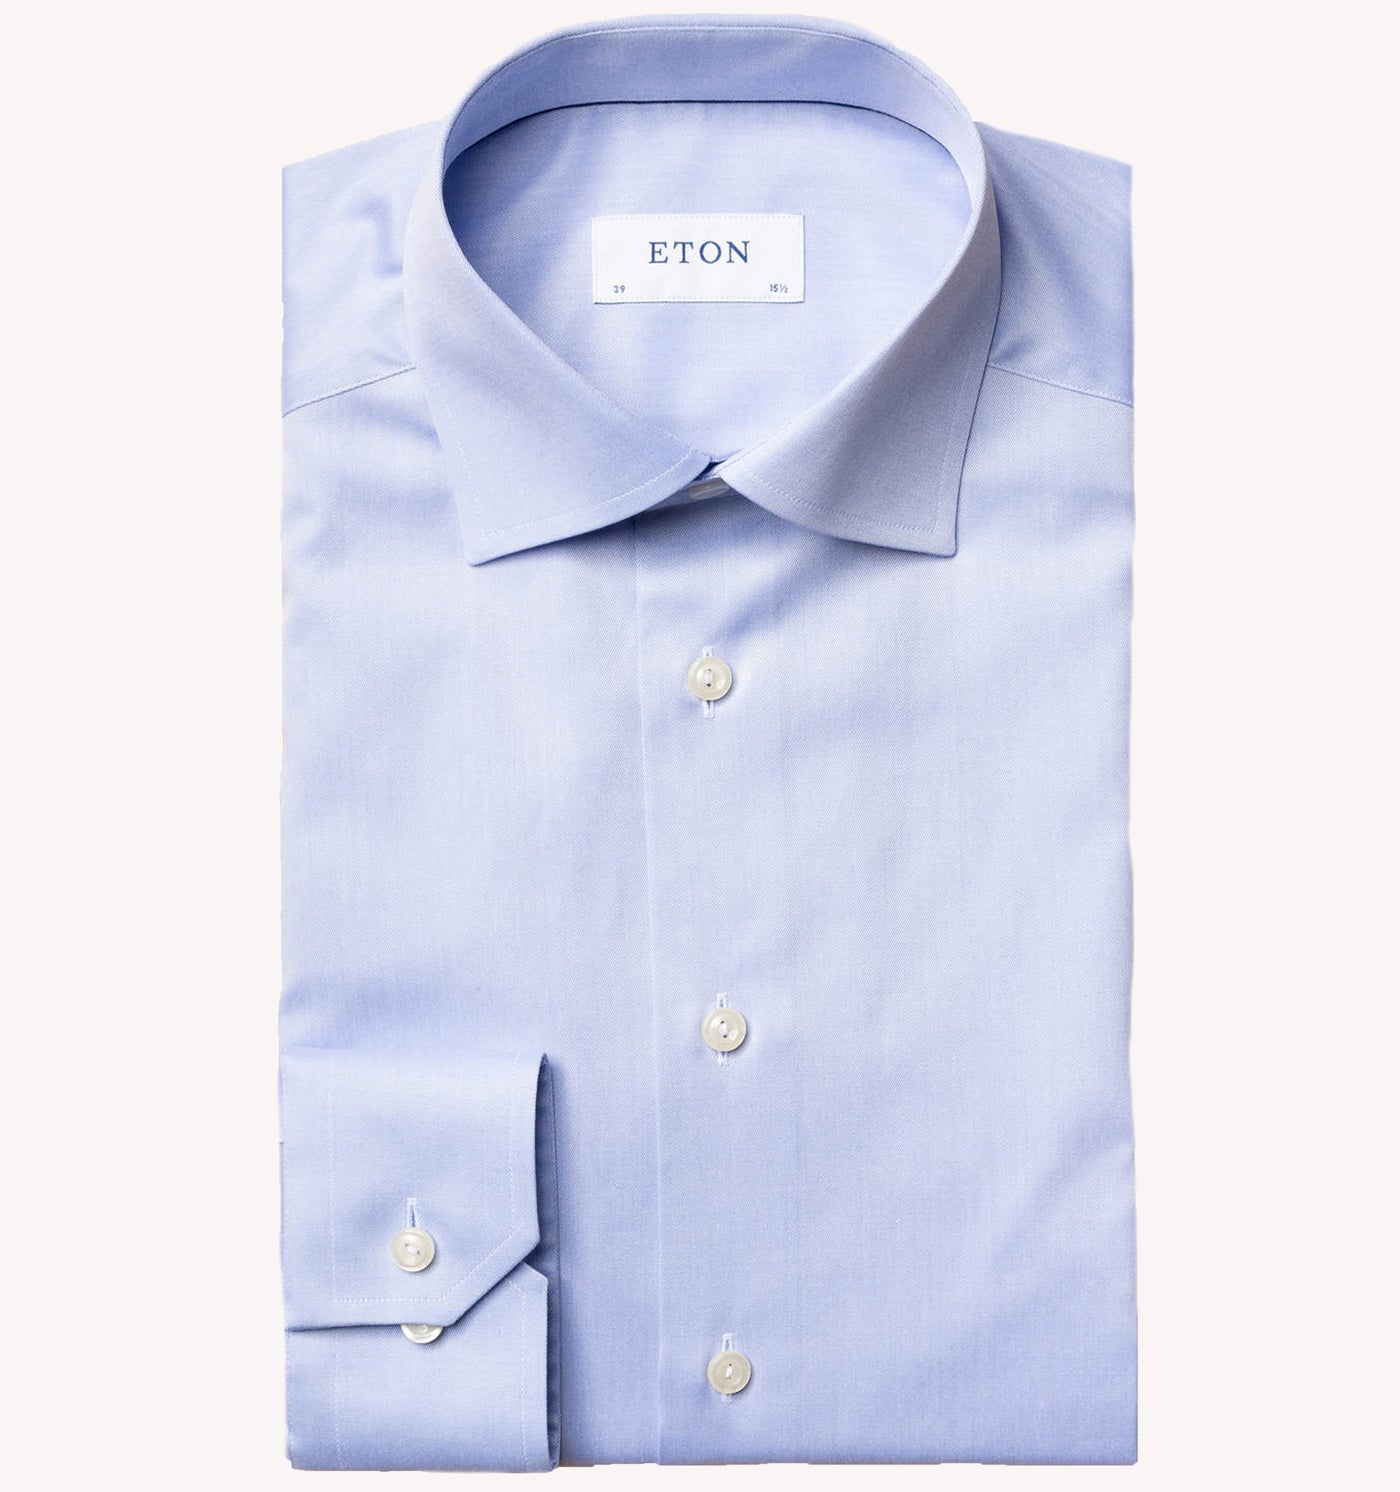 Eton Signature Twill Dress Shirt in Blue